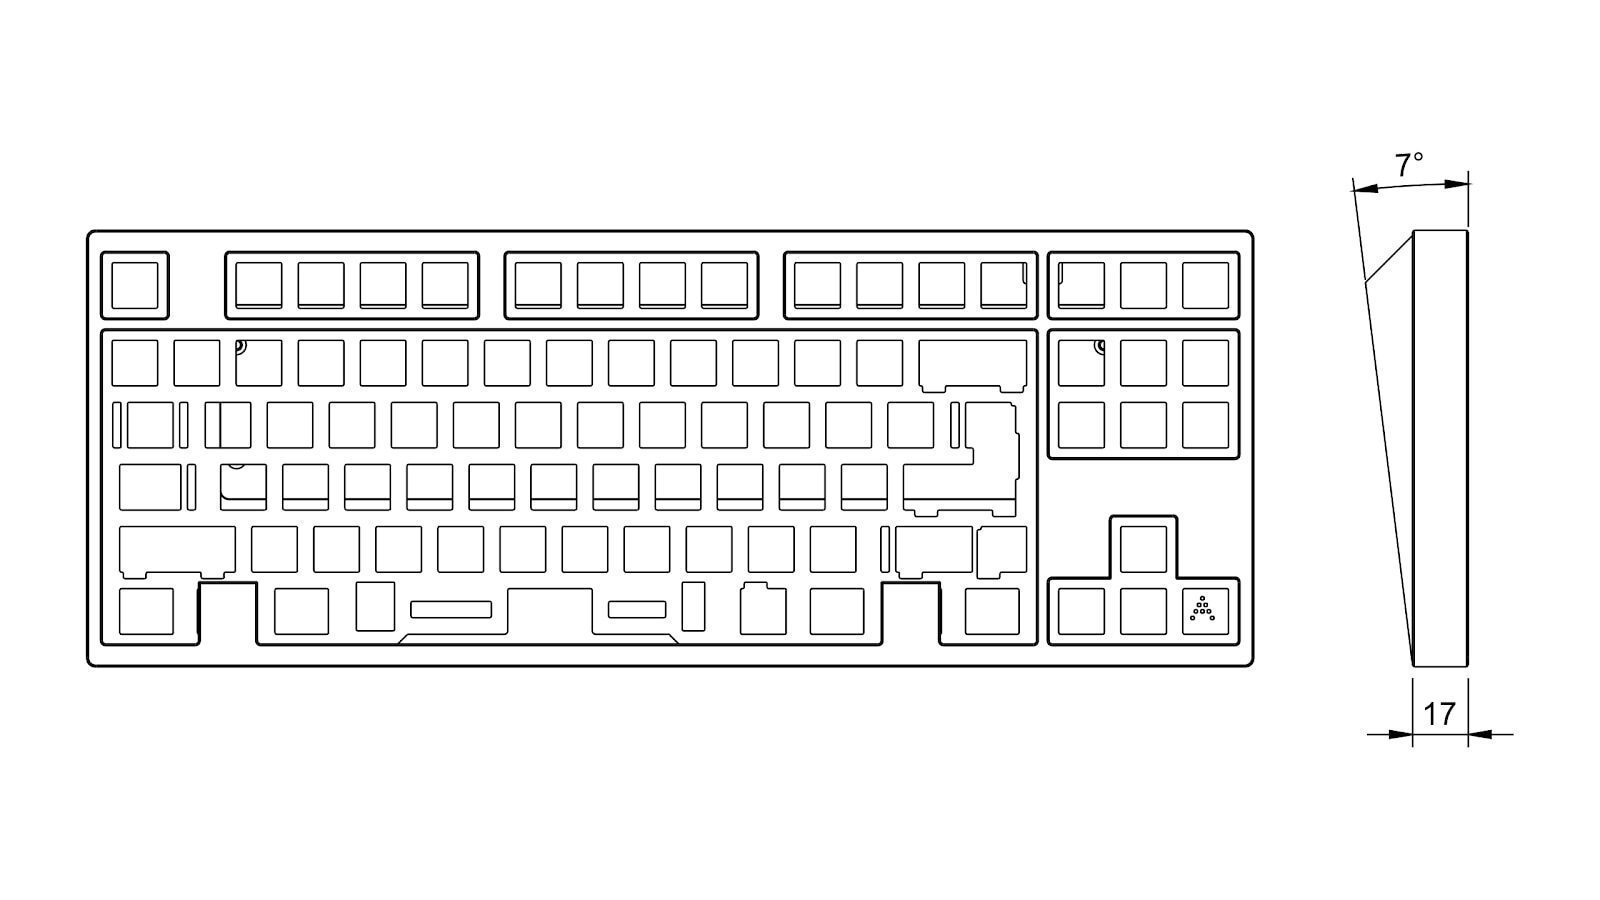 KBD8X Mark II PC Plate Soldered Customized Mechanical Keyboard DIY KIT WKL and TKL Version 80% MECHANICAL keyboard